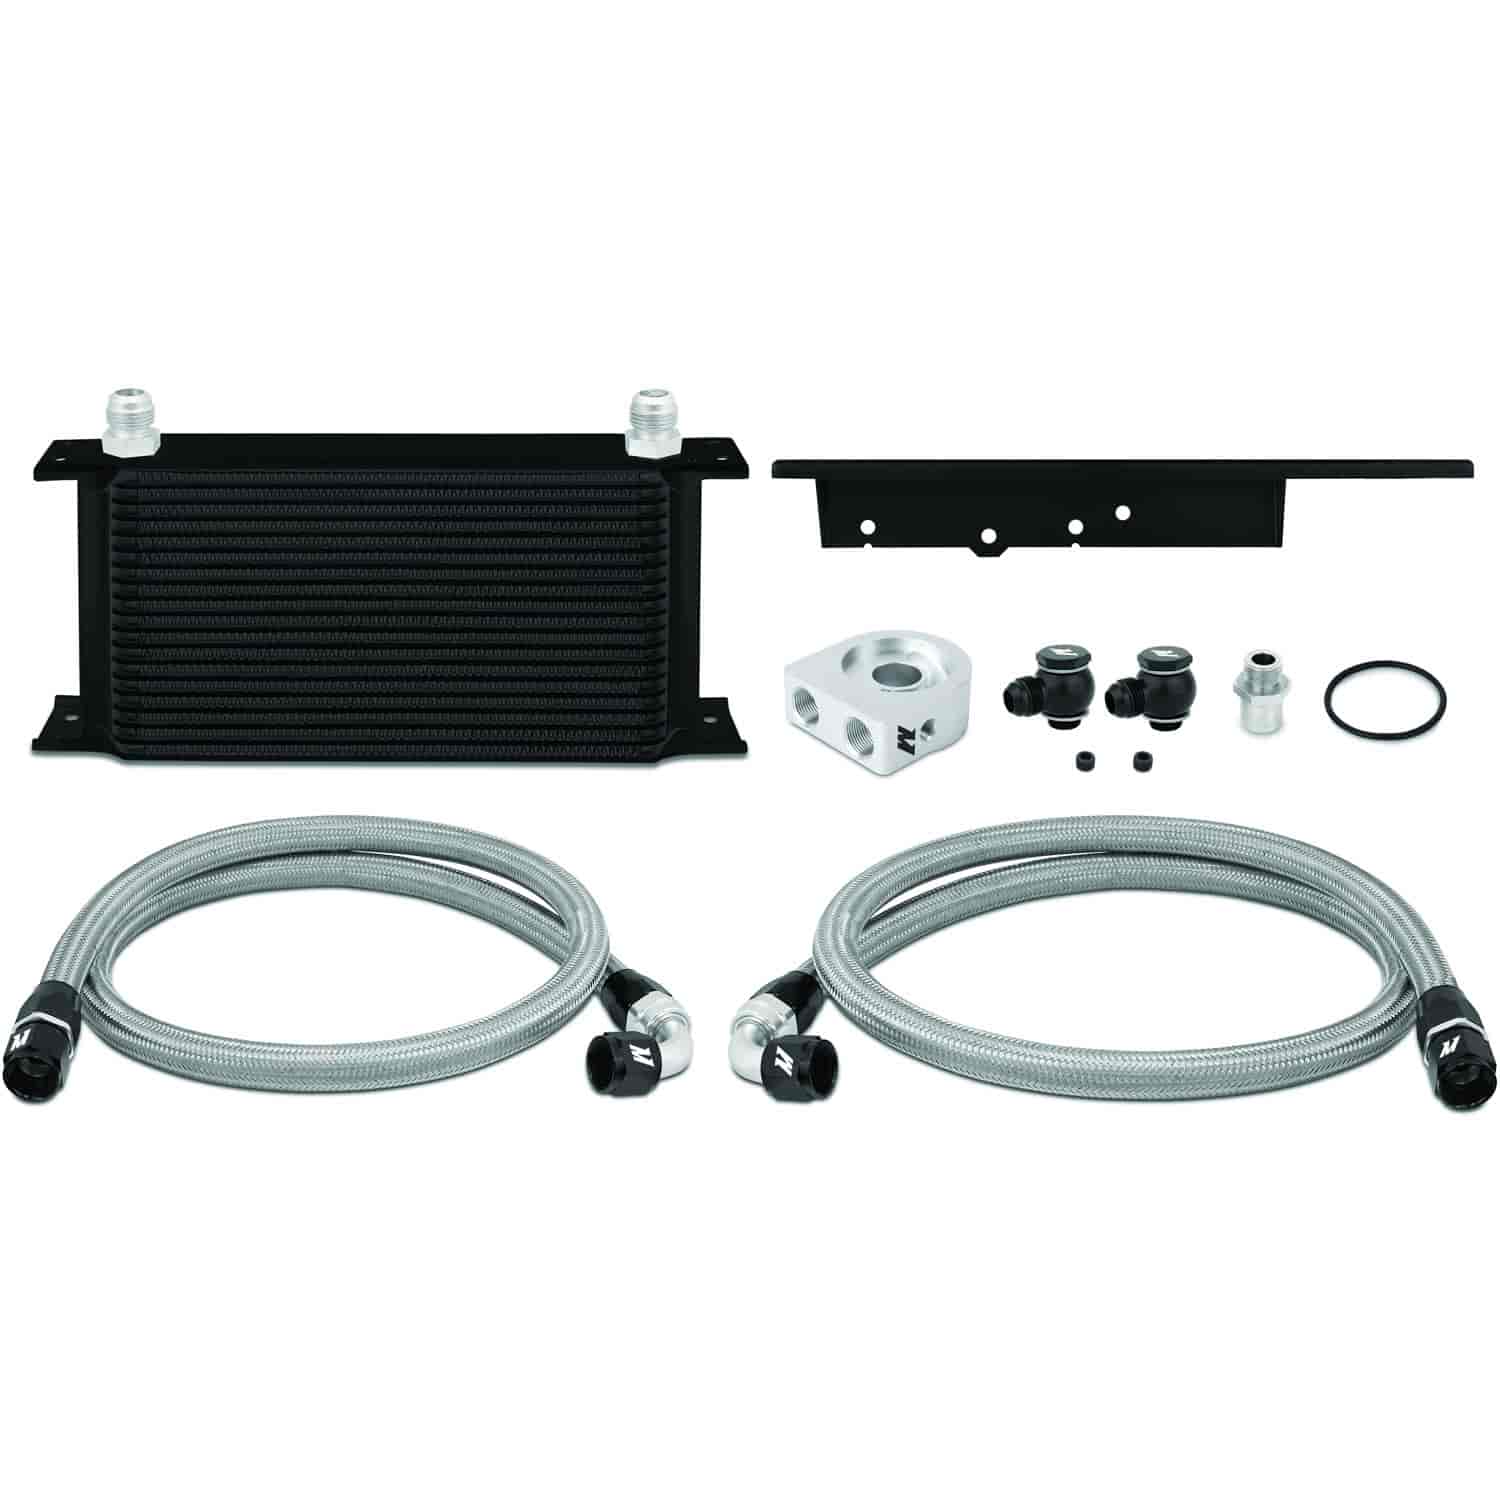 Nissan 350Z / Infiniti G35 Coupe Oil Cooler Kit Black - MFG Part No. MMOC-350Z-03BK